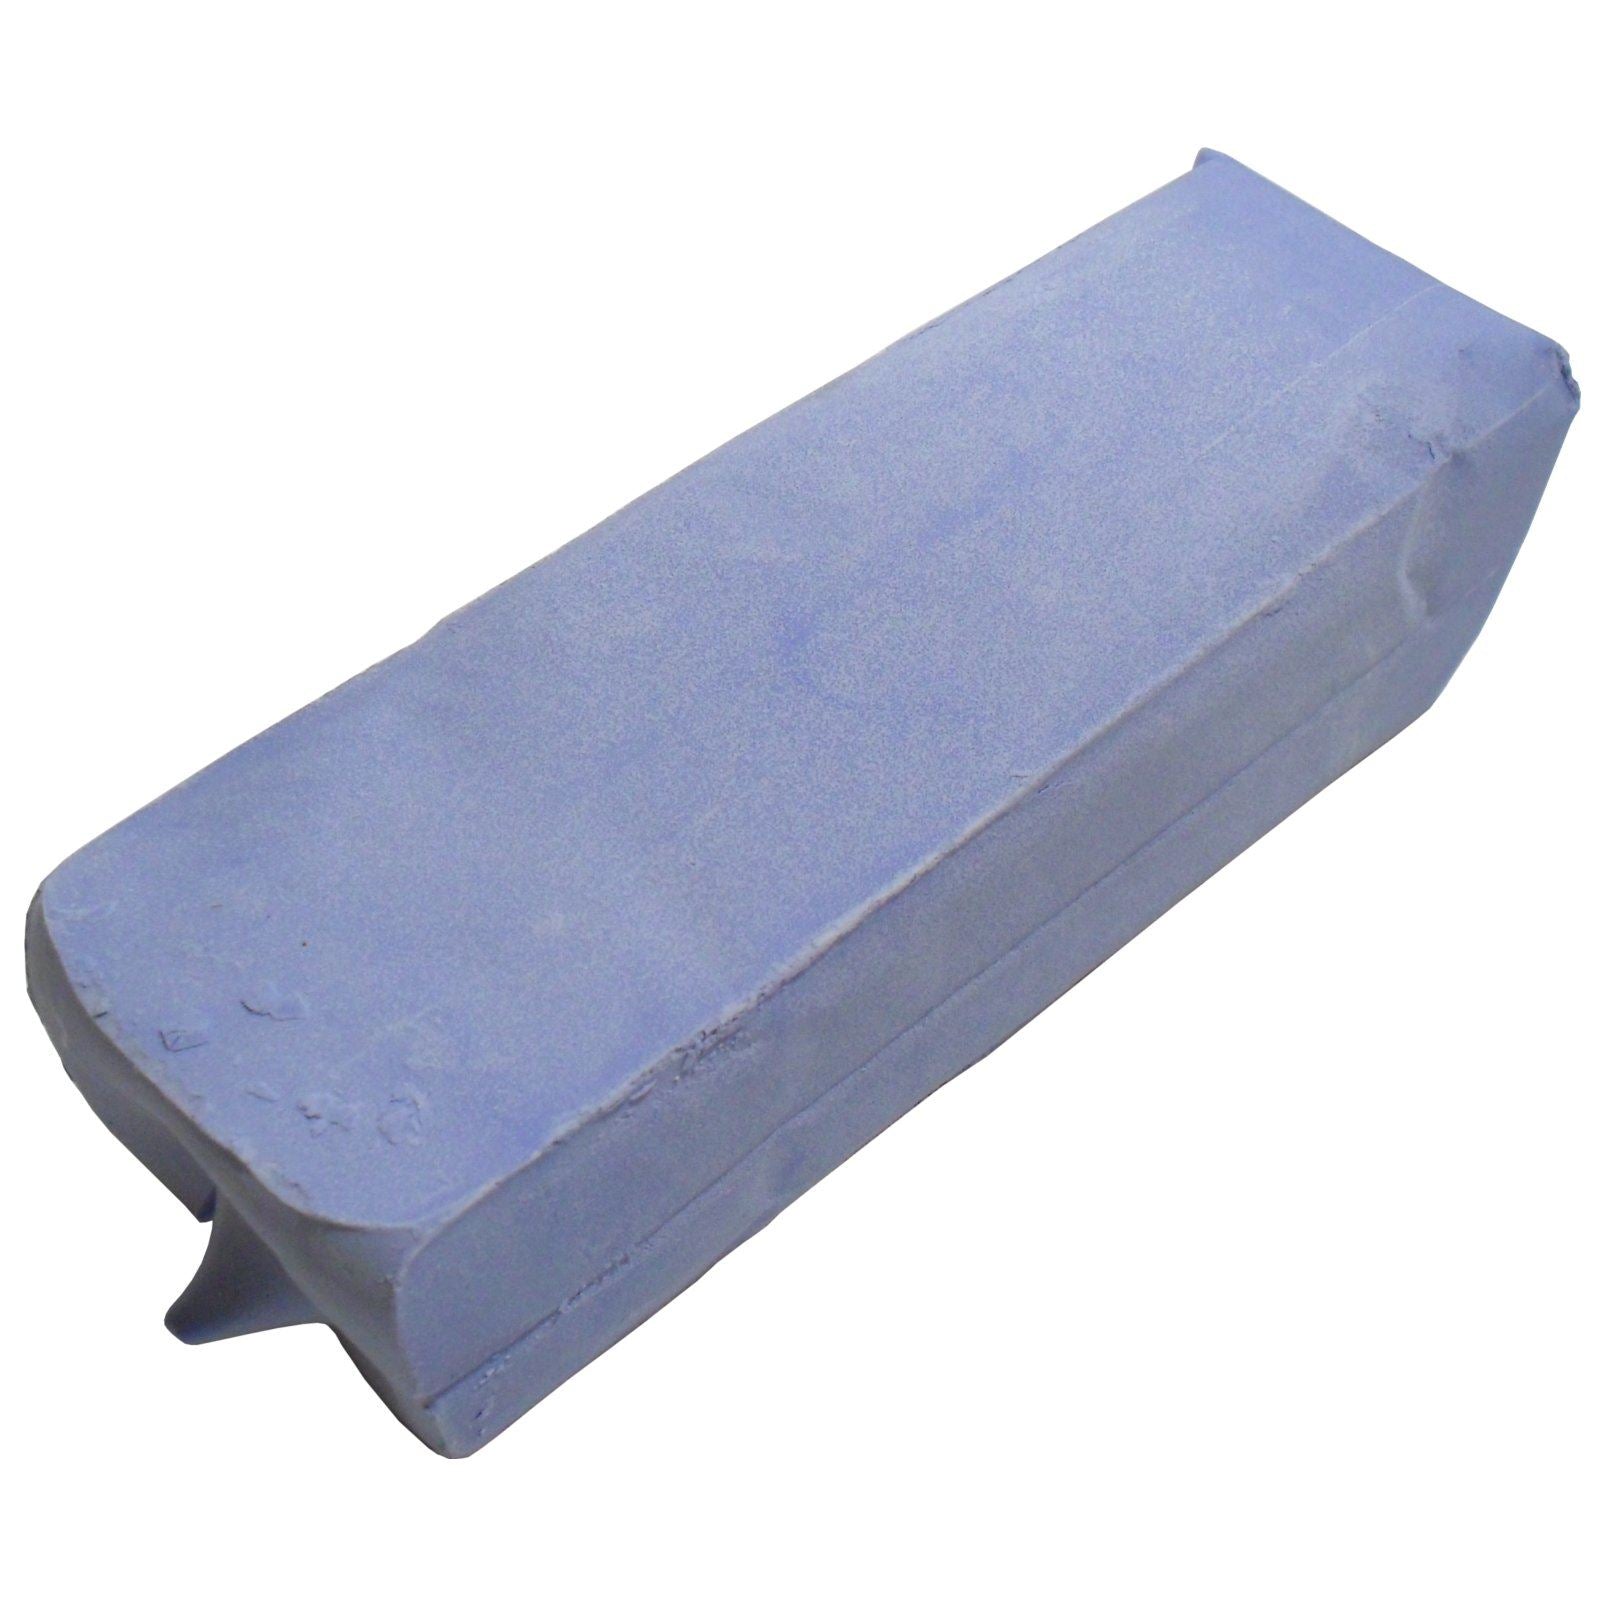 Medium / Blue / Abrasive Polishing Compound for all Materials - 830 grams POL14